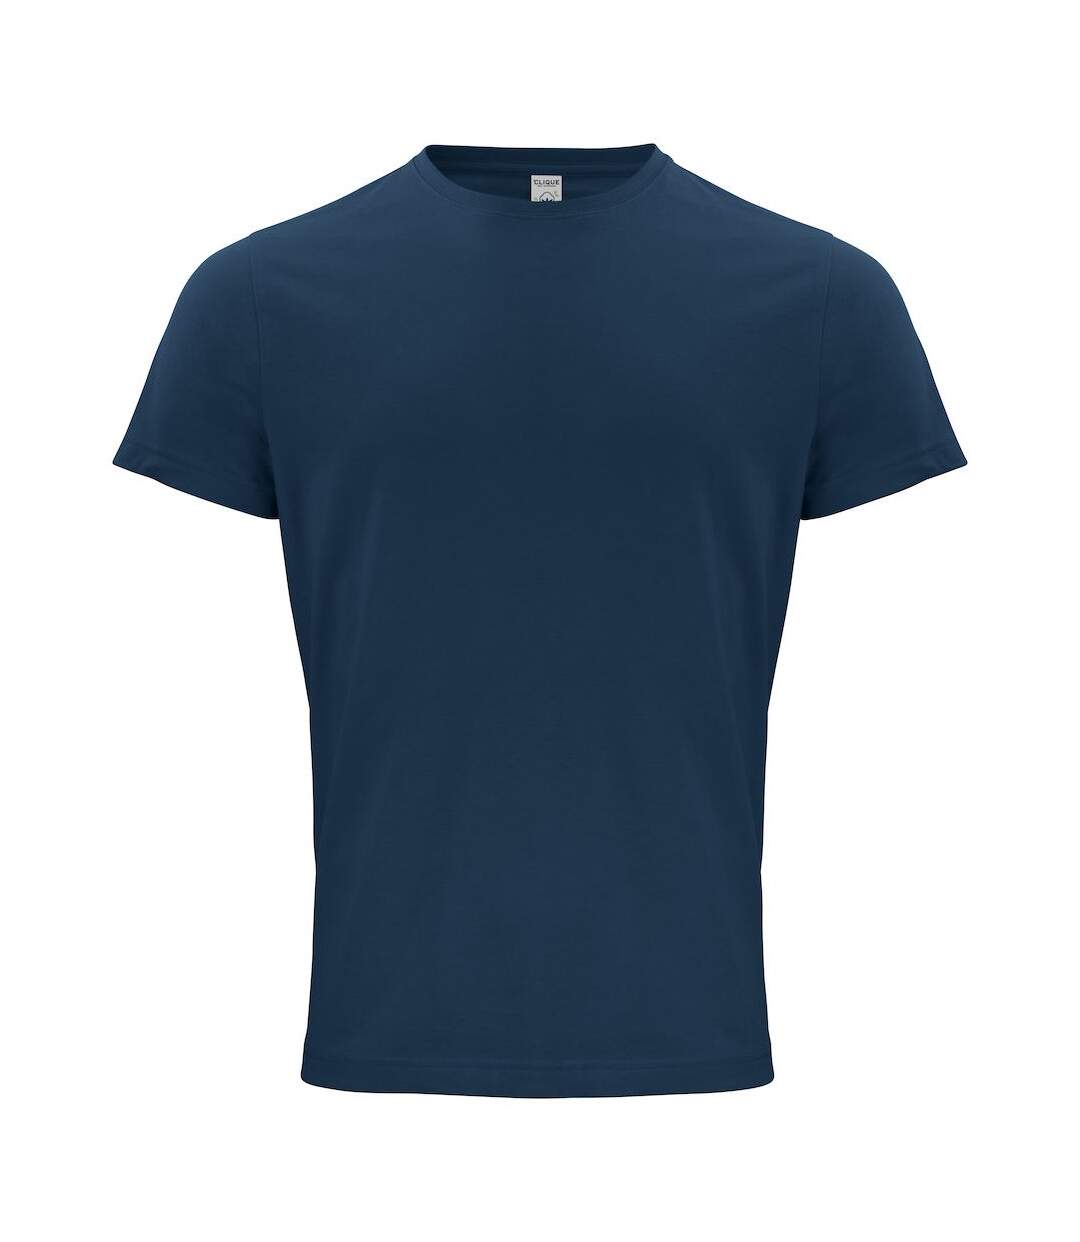 Clique - T-shirt CLASSIC OC - Homme (Bleu marine foncé) - UTUB278